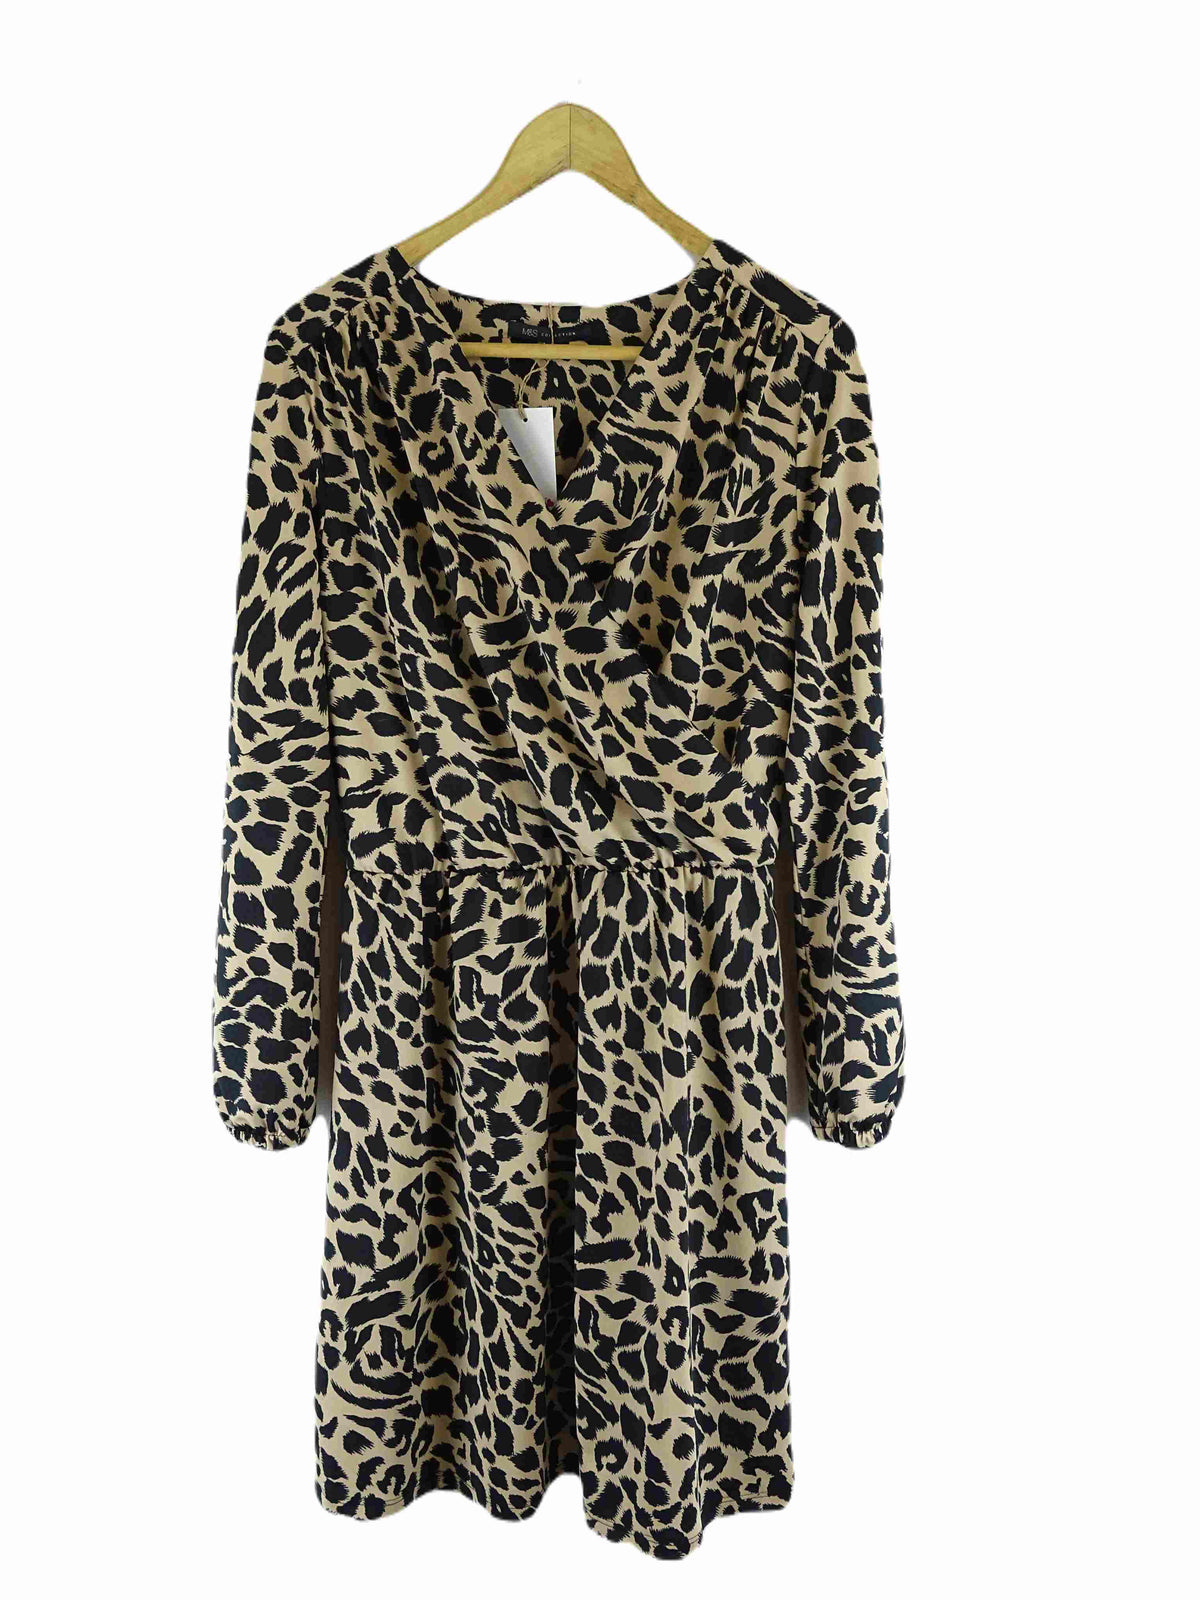 Marks and Spencer Leopard Print Dress 14